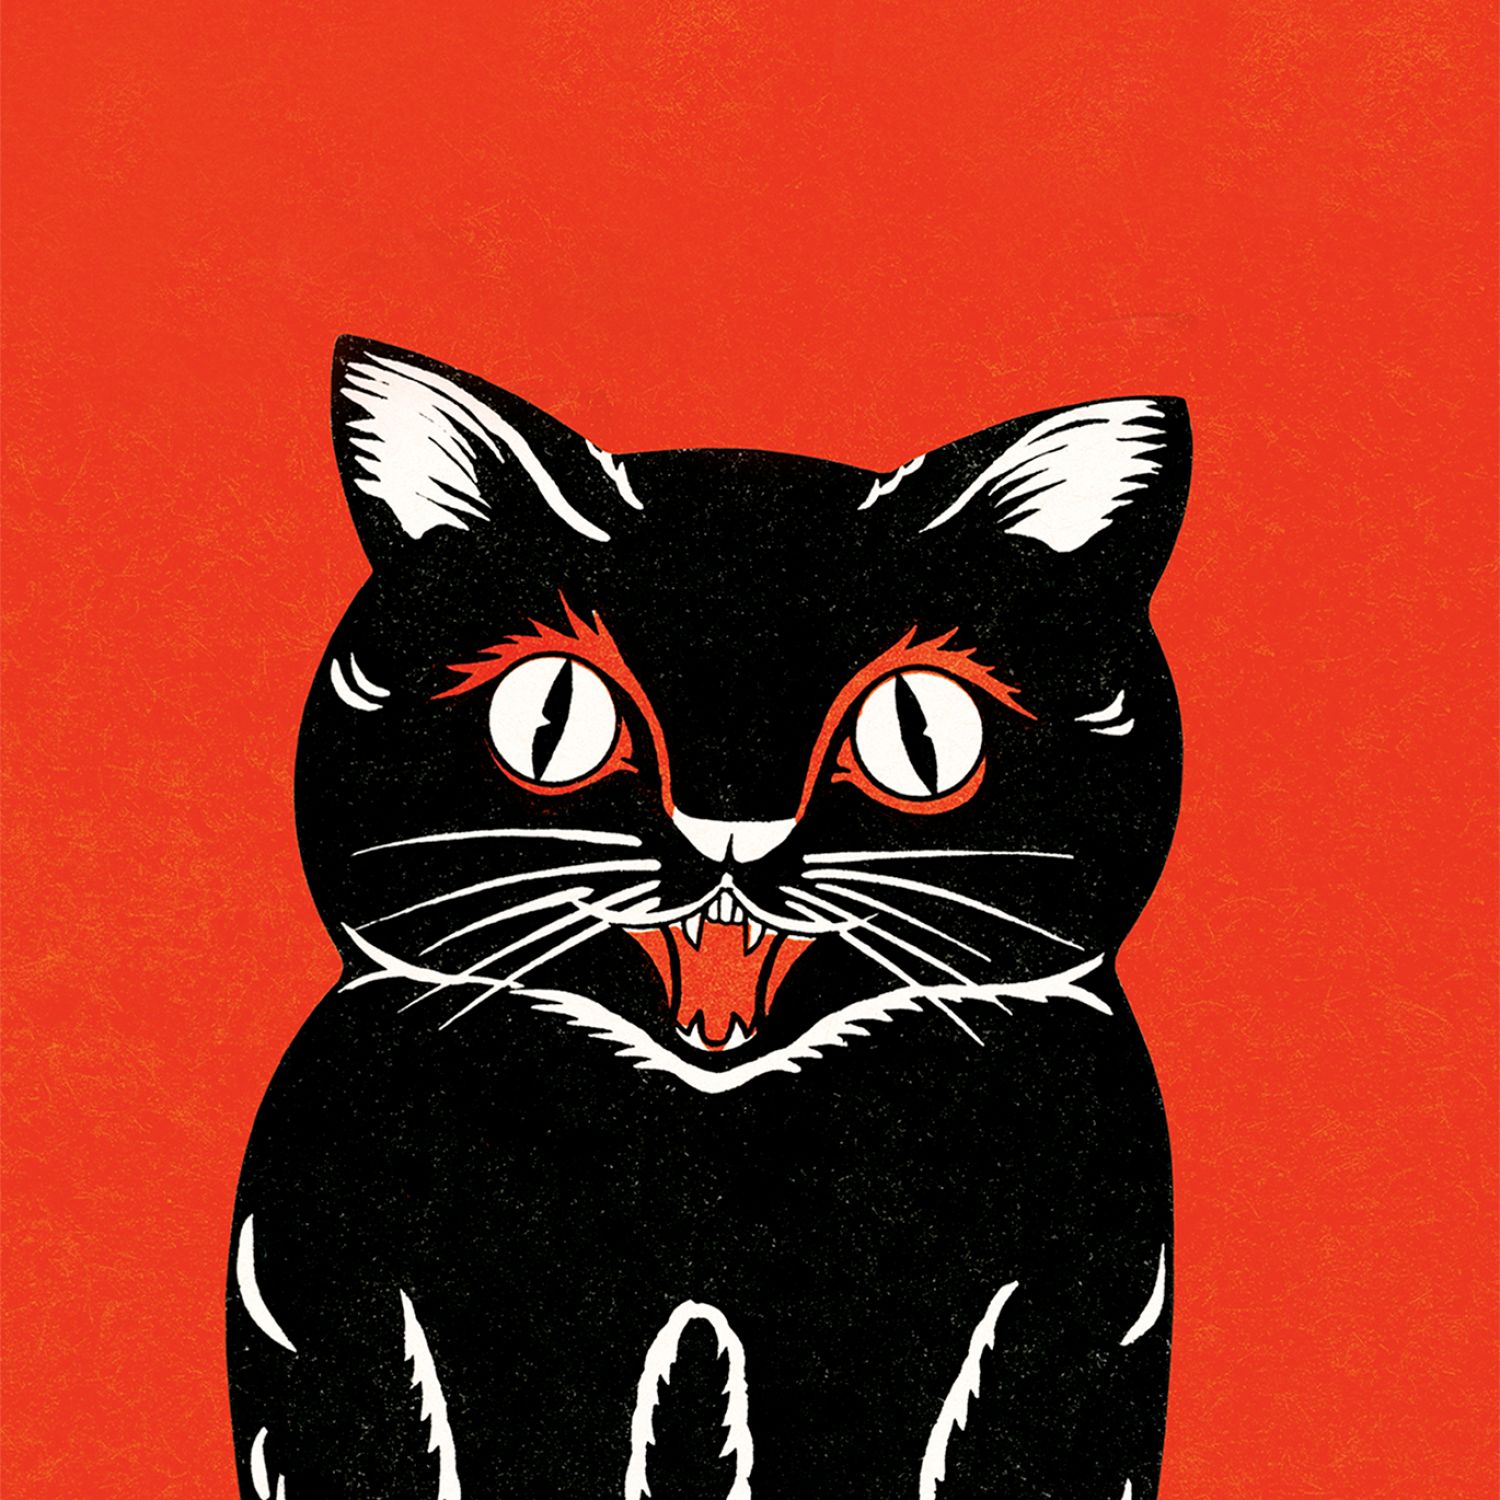 Retro illustration of black cat on orange-red background